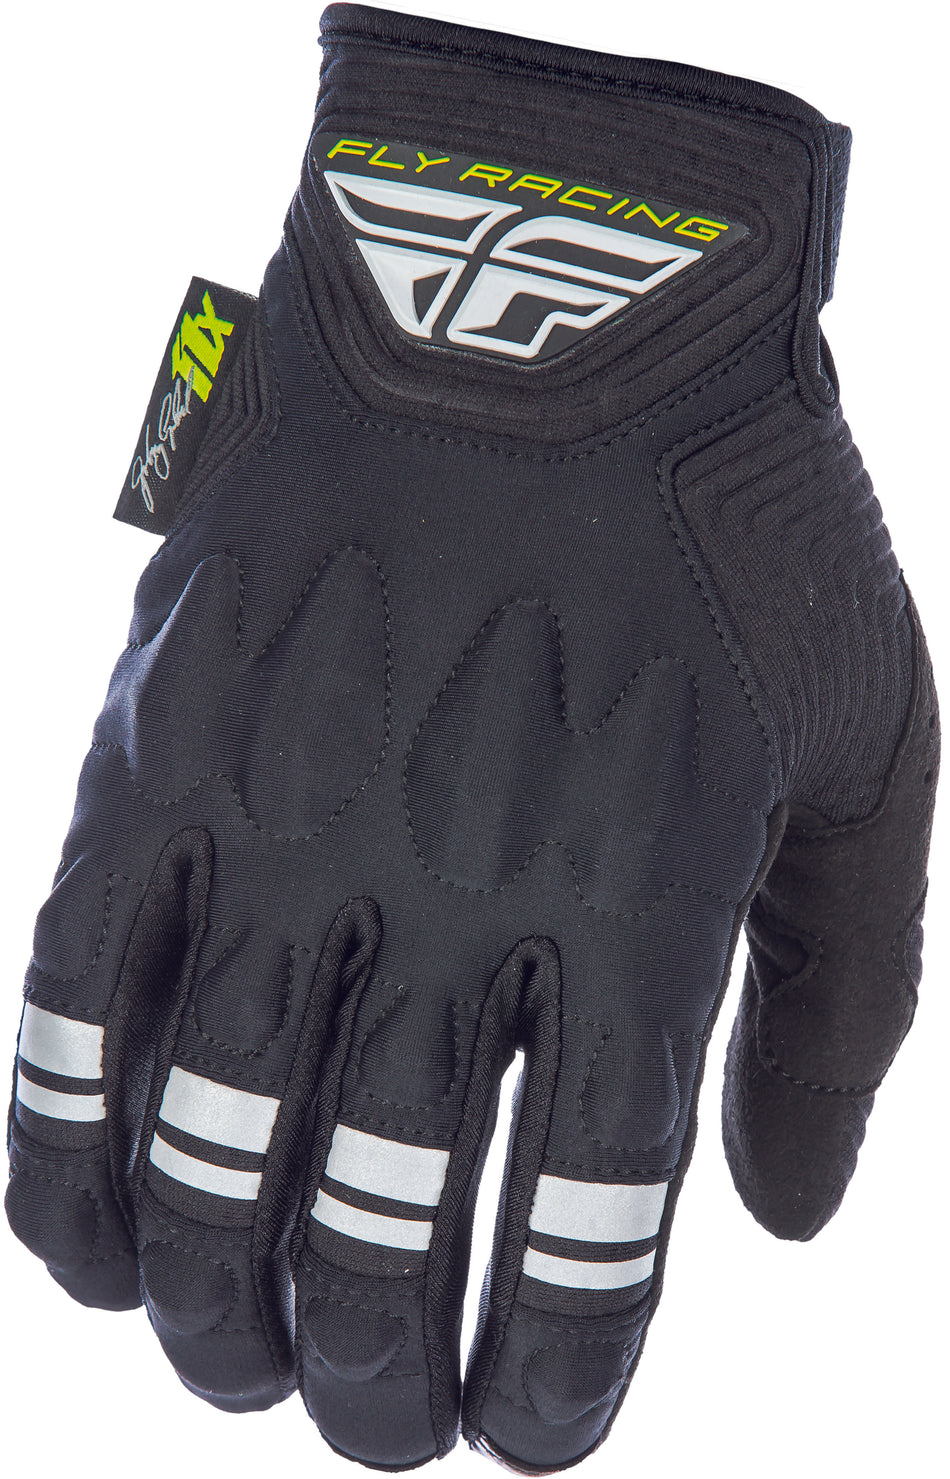 FLY RACING Johnny Campbell Sig Patrol Xc Lite Gloves Black/Grey 370-68007